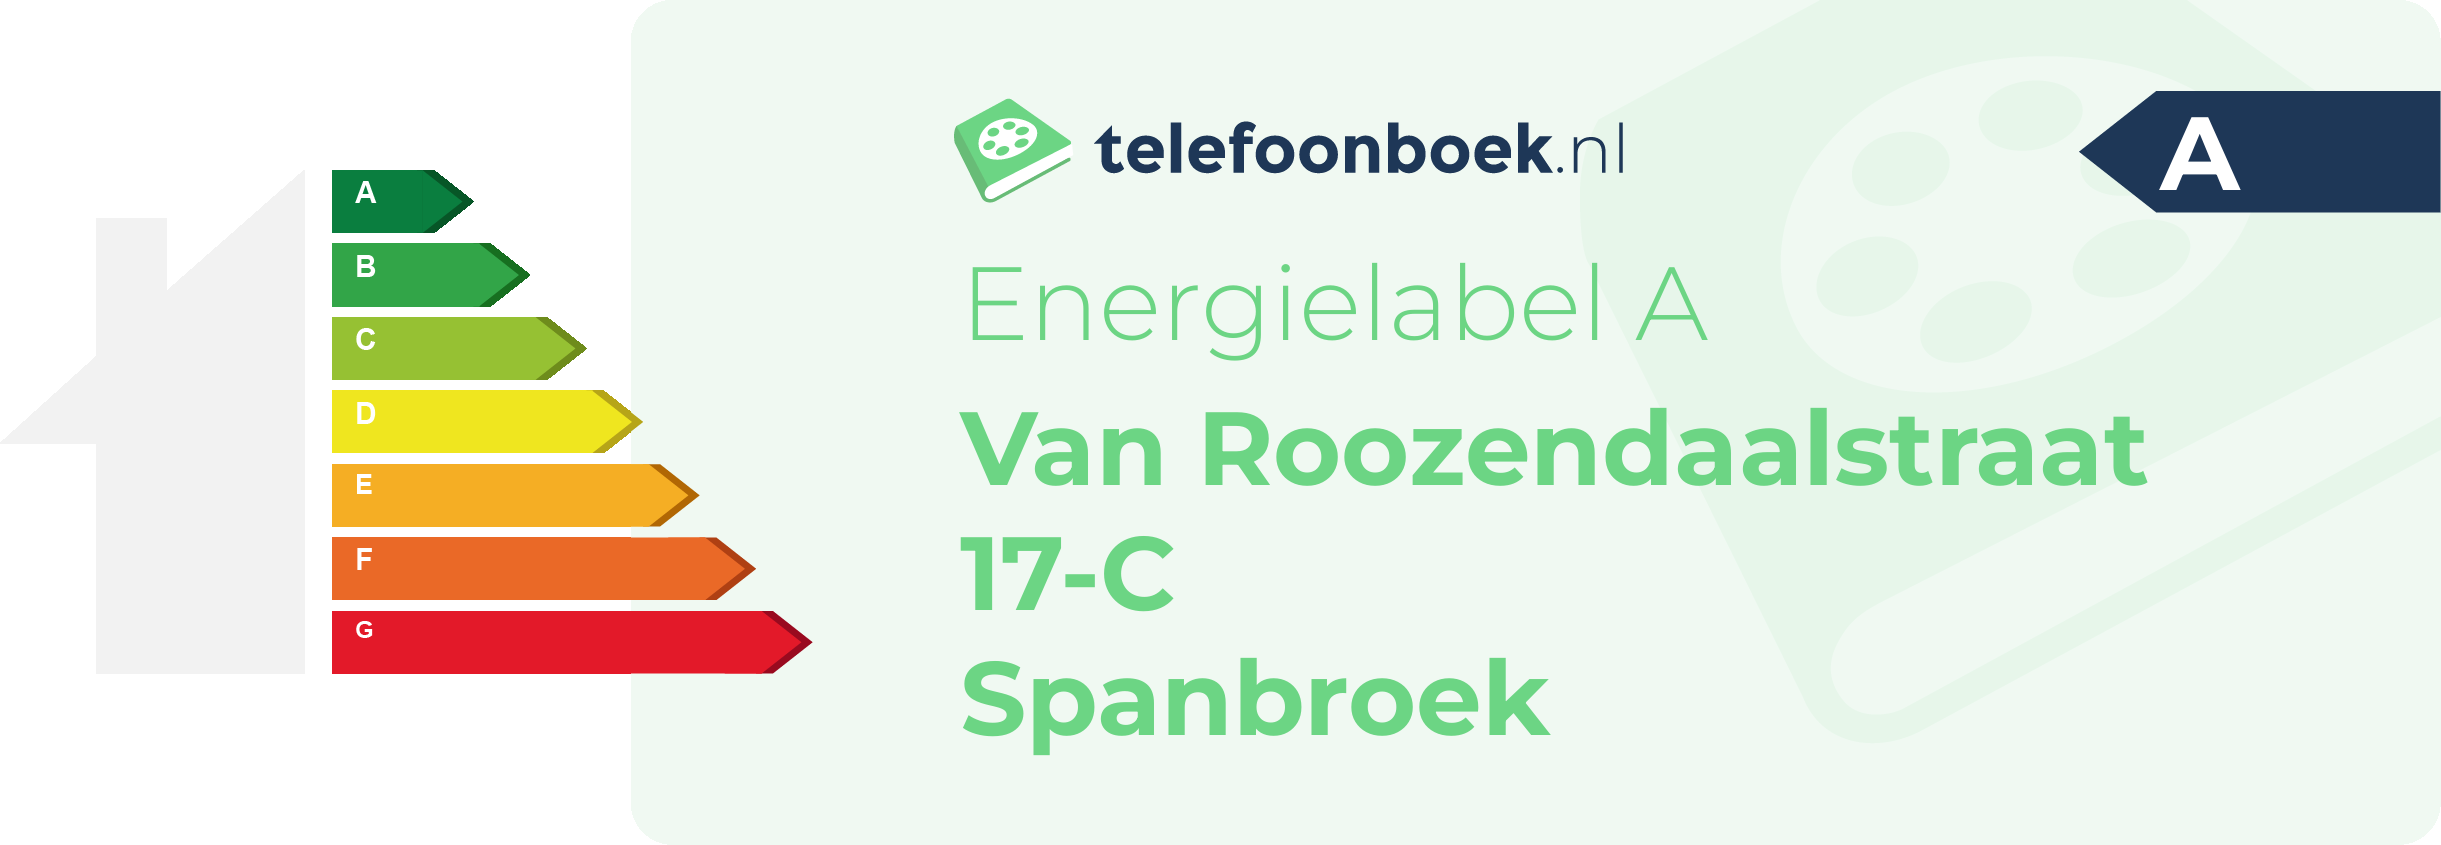 Energielabel Van Roozendaalstraat 17-C Spanbroek